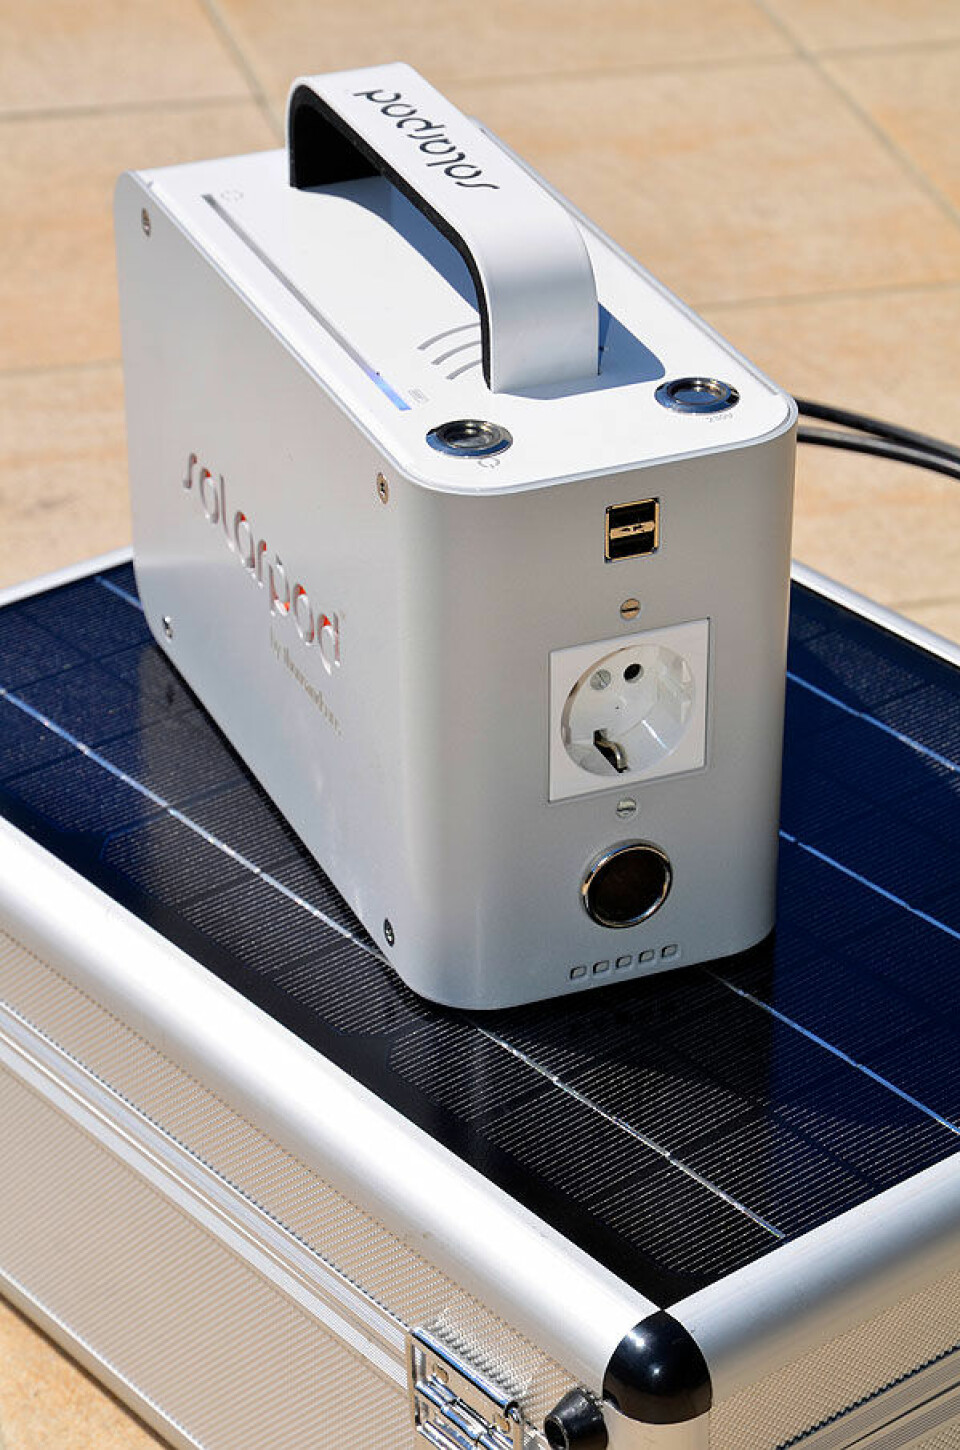 Solarpod kan leveres i en koffert med solcellepanel.